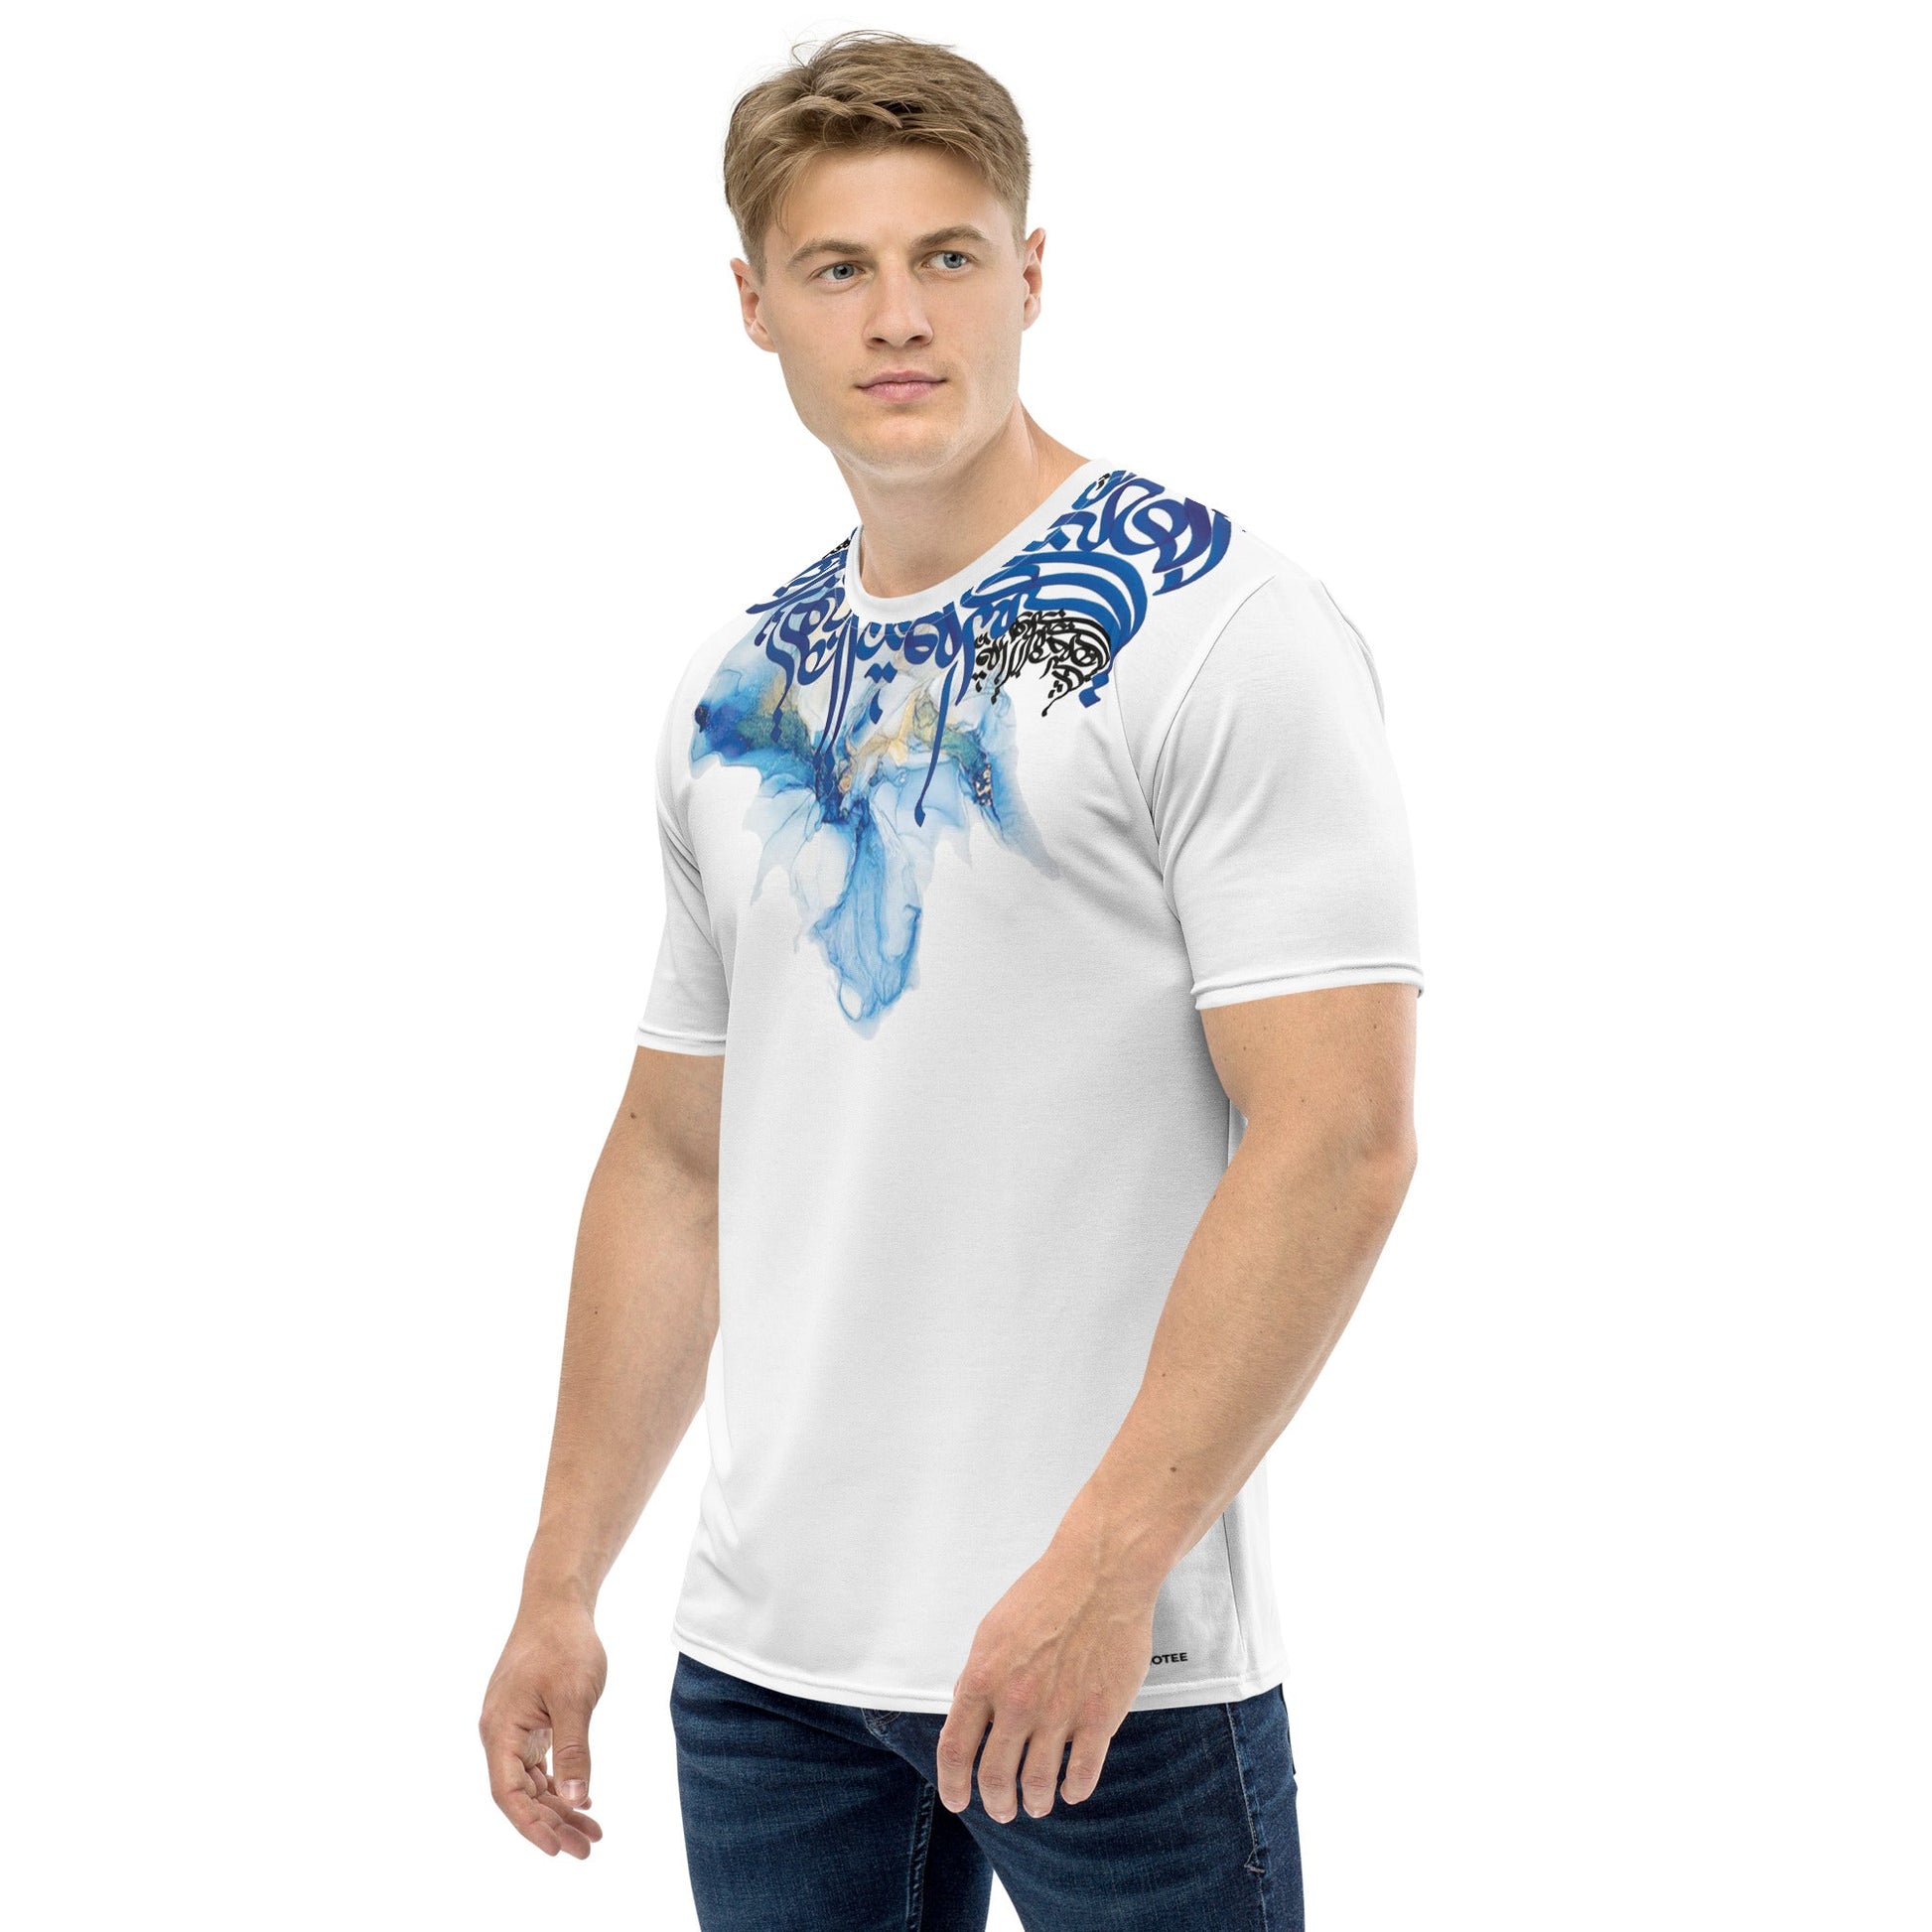 ROYA Premium Men's T-Shirt - Bonotee